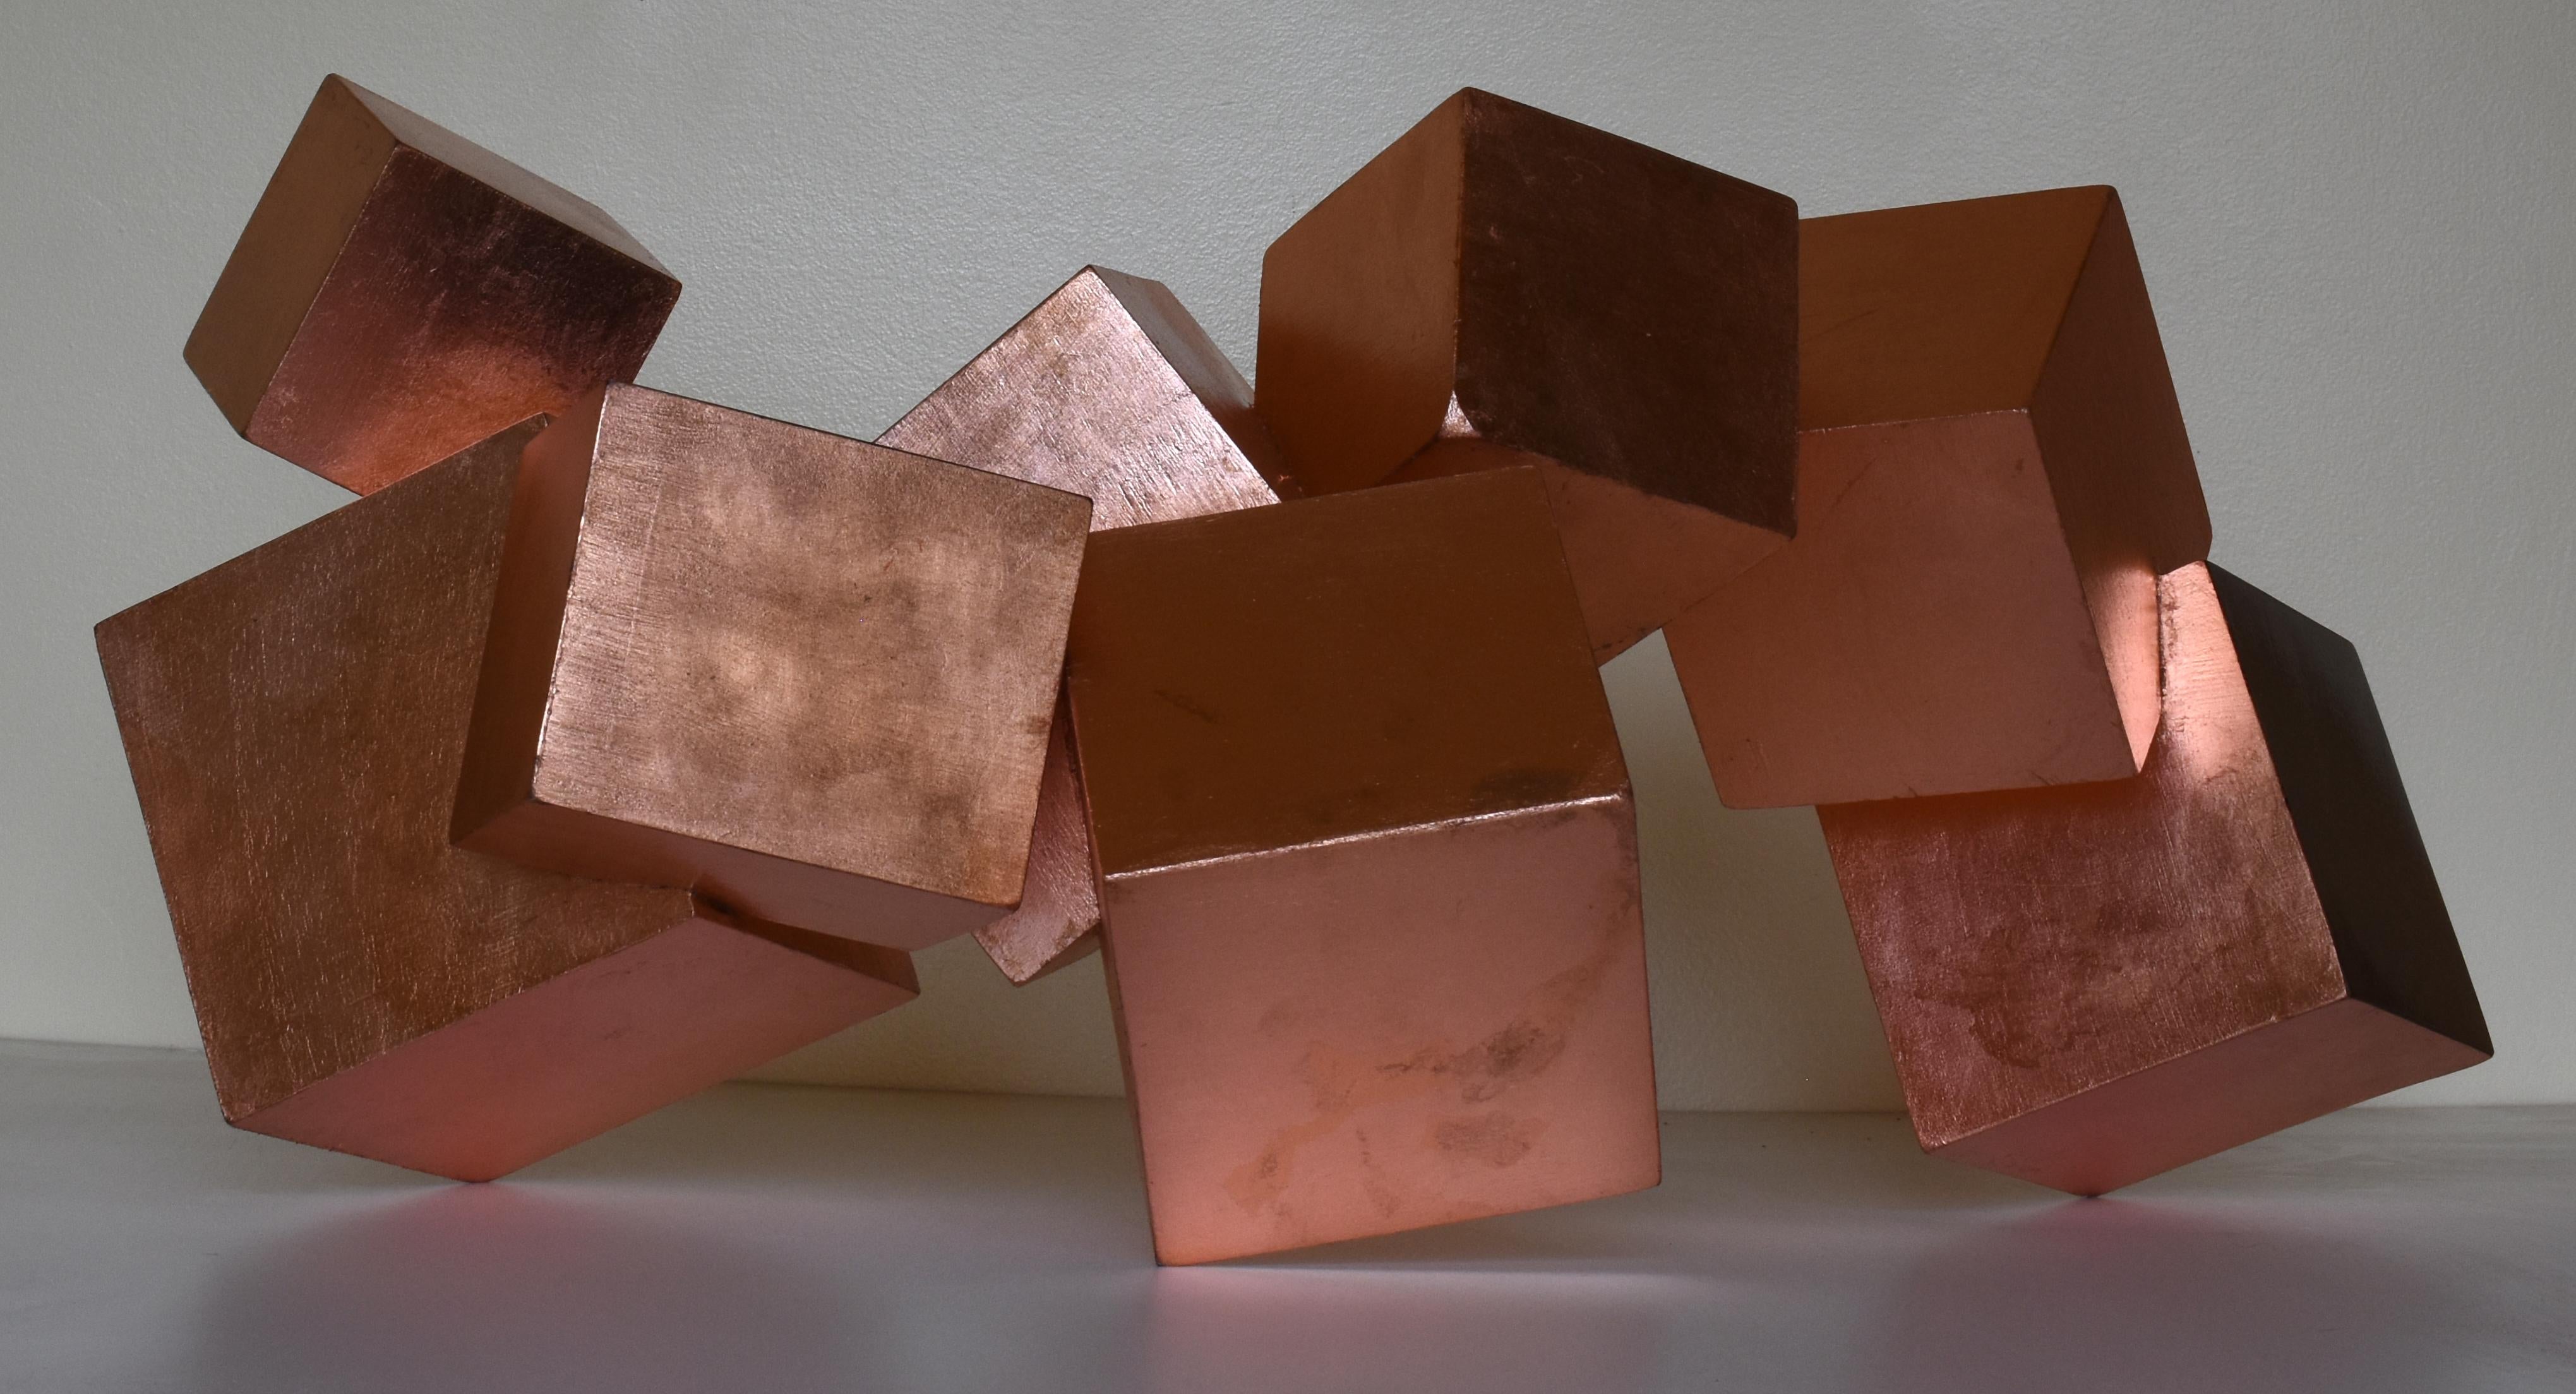 Copper and Mahogany Pyrite (exotic wood, metallic, cubic, table top sculpture) 6